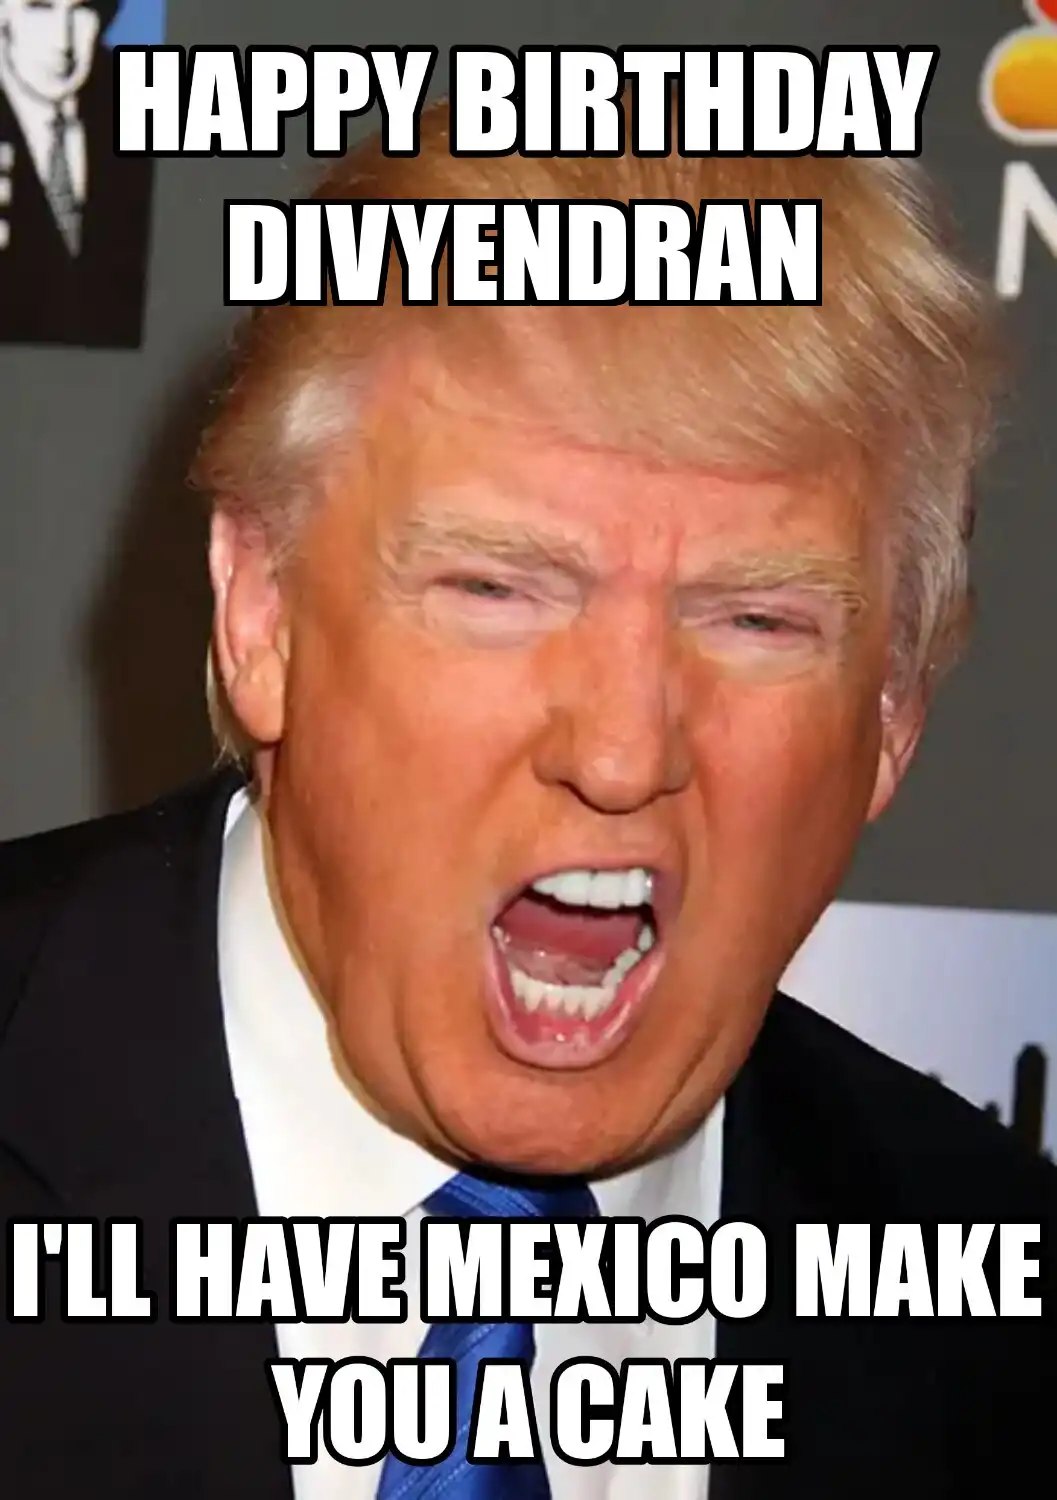 Happy Birthday Divyendran Mexico Make You A Cake Meme